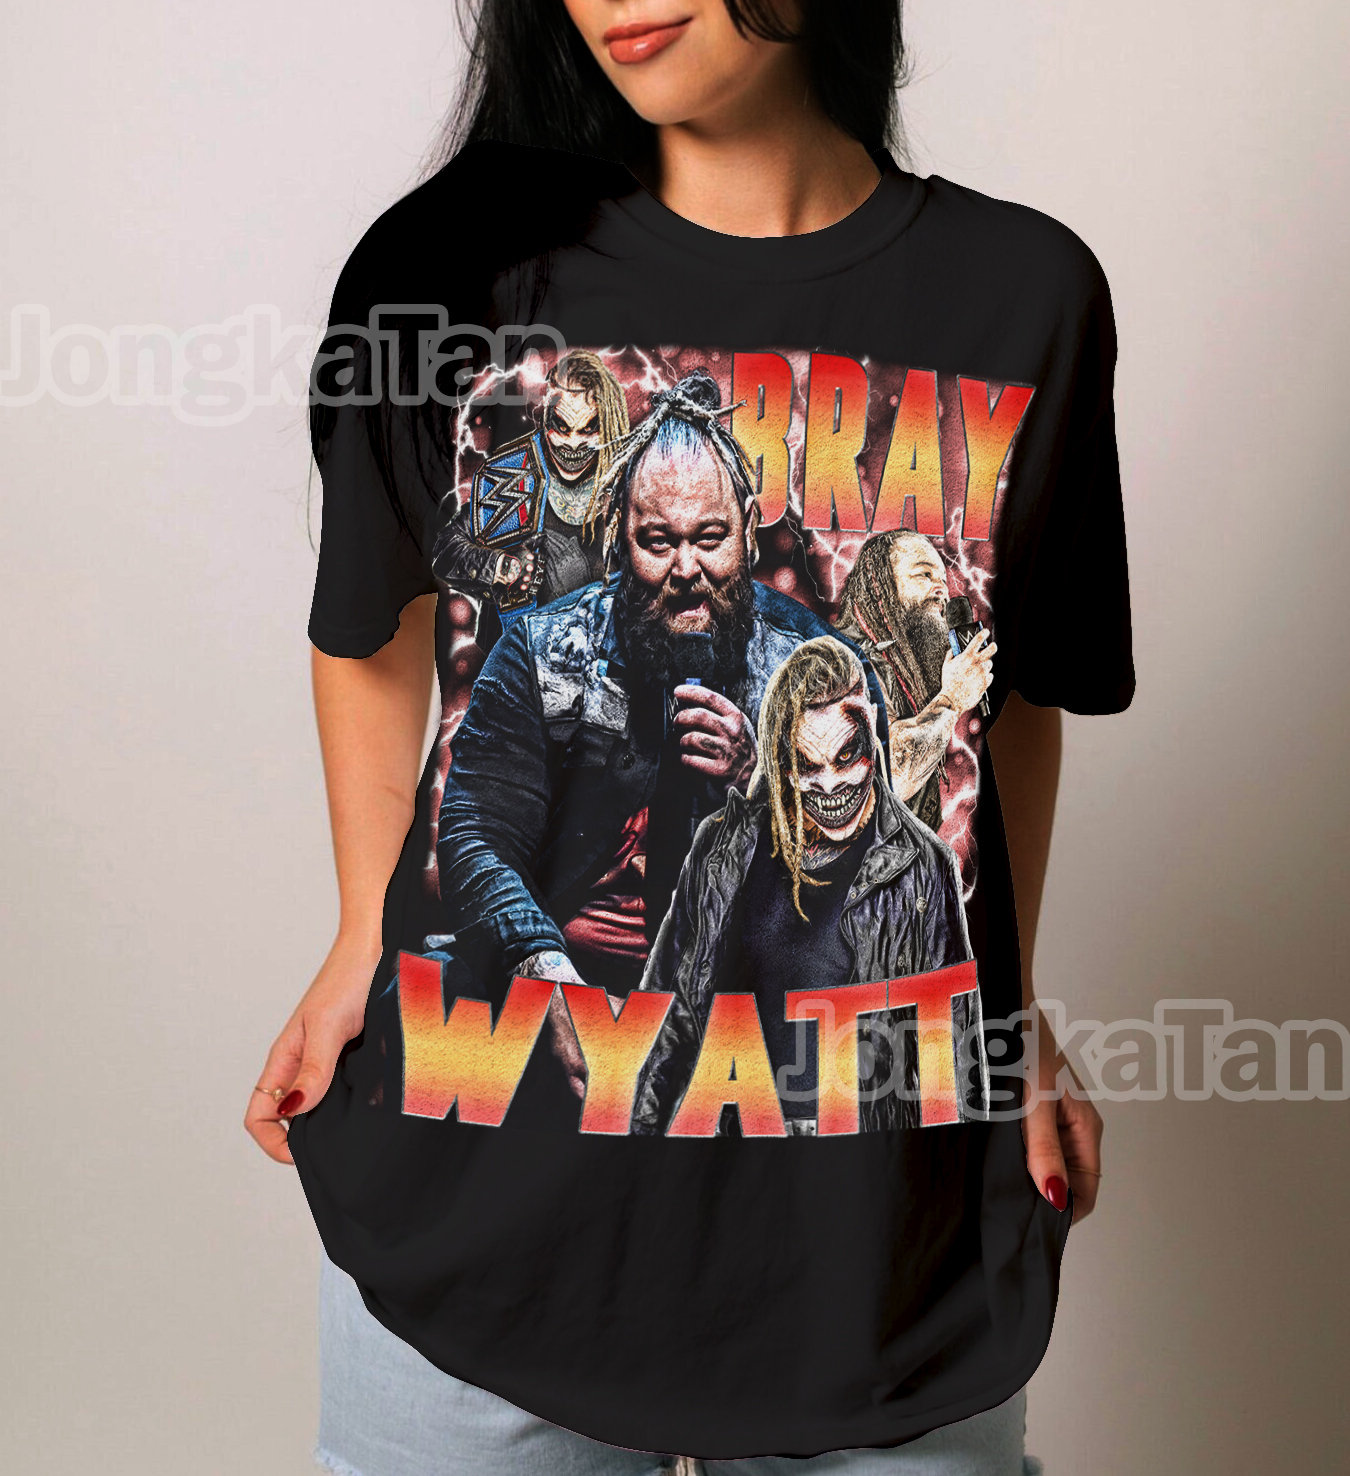 Bray Wyatt Shirt -  Canada